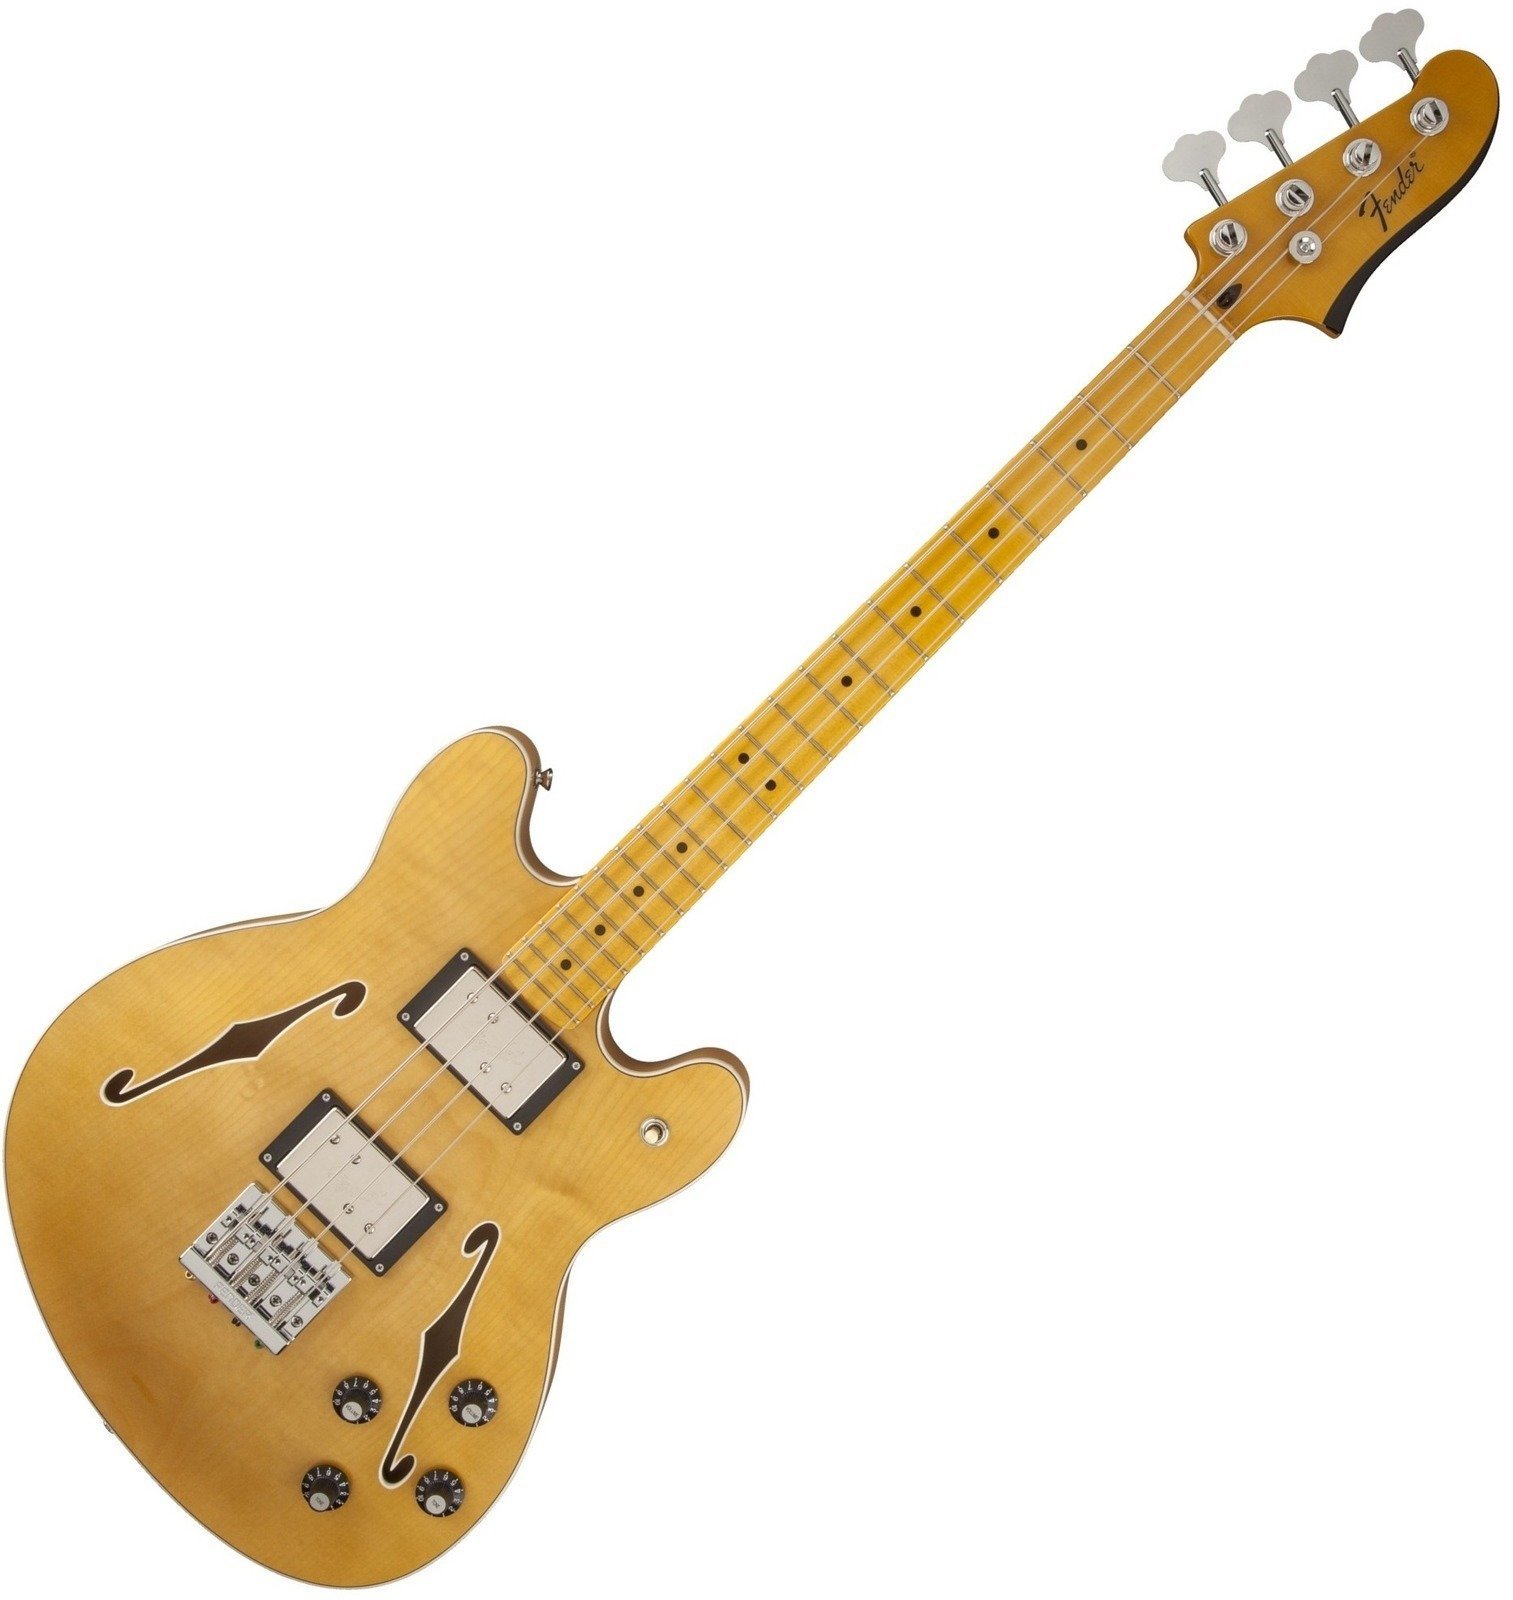 Basse semi-acoustique Fender Starcaster Bass Natural